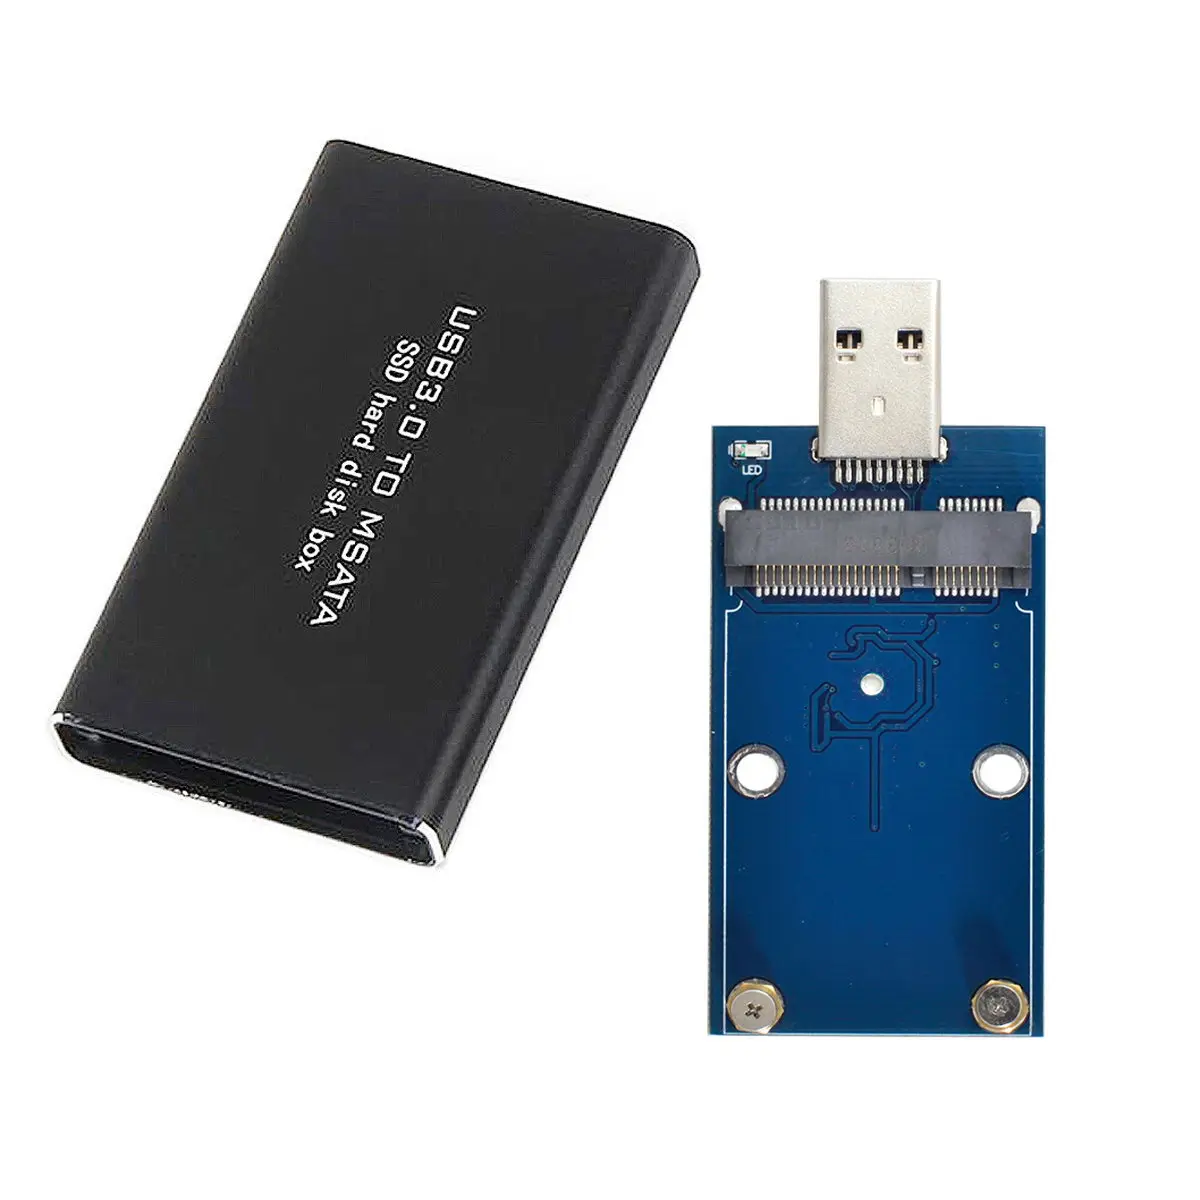 

Jimier CY Mini PCI-E mSATA to USB 3.0 External SSD PCBA Conveter Adapter Card with Enclosure